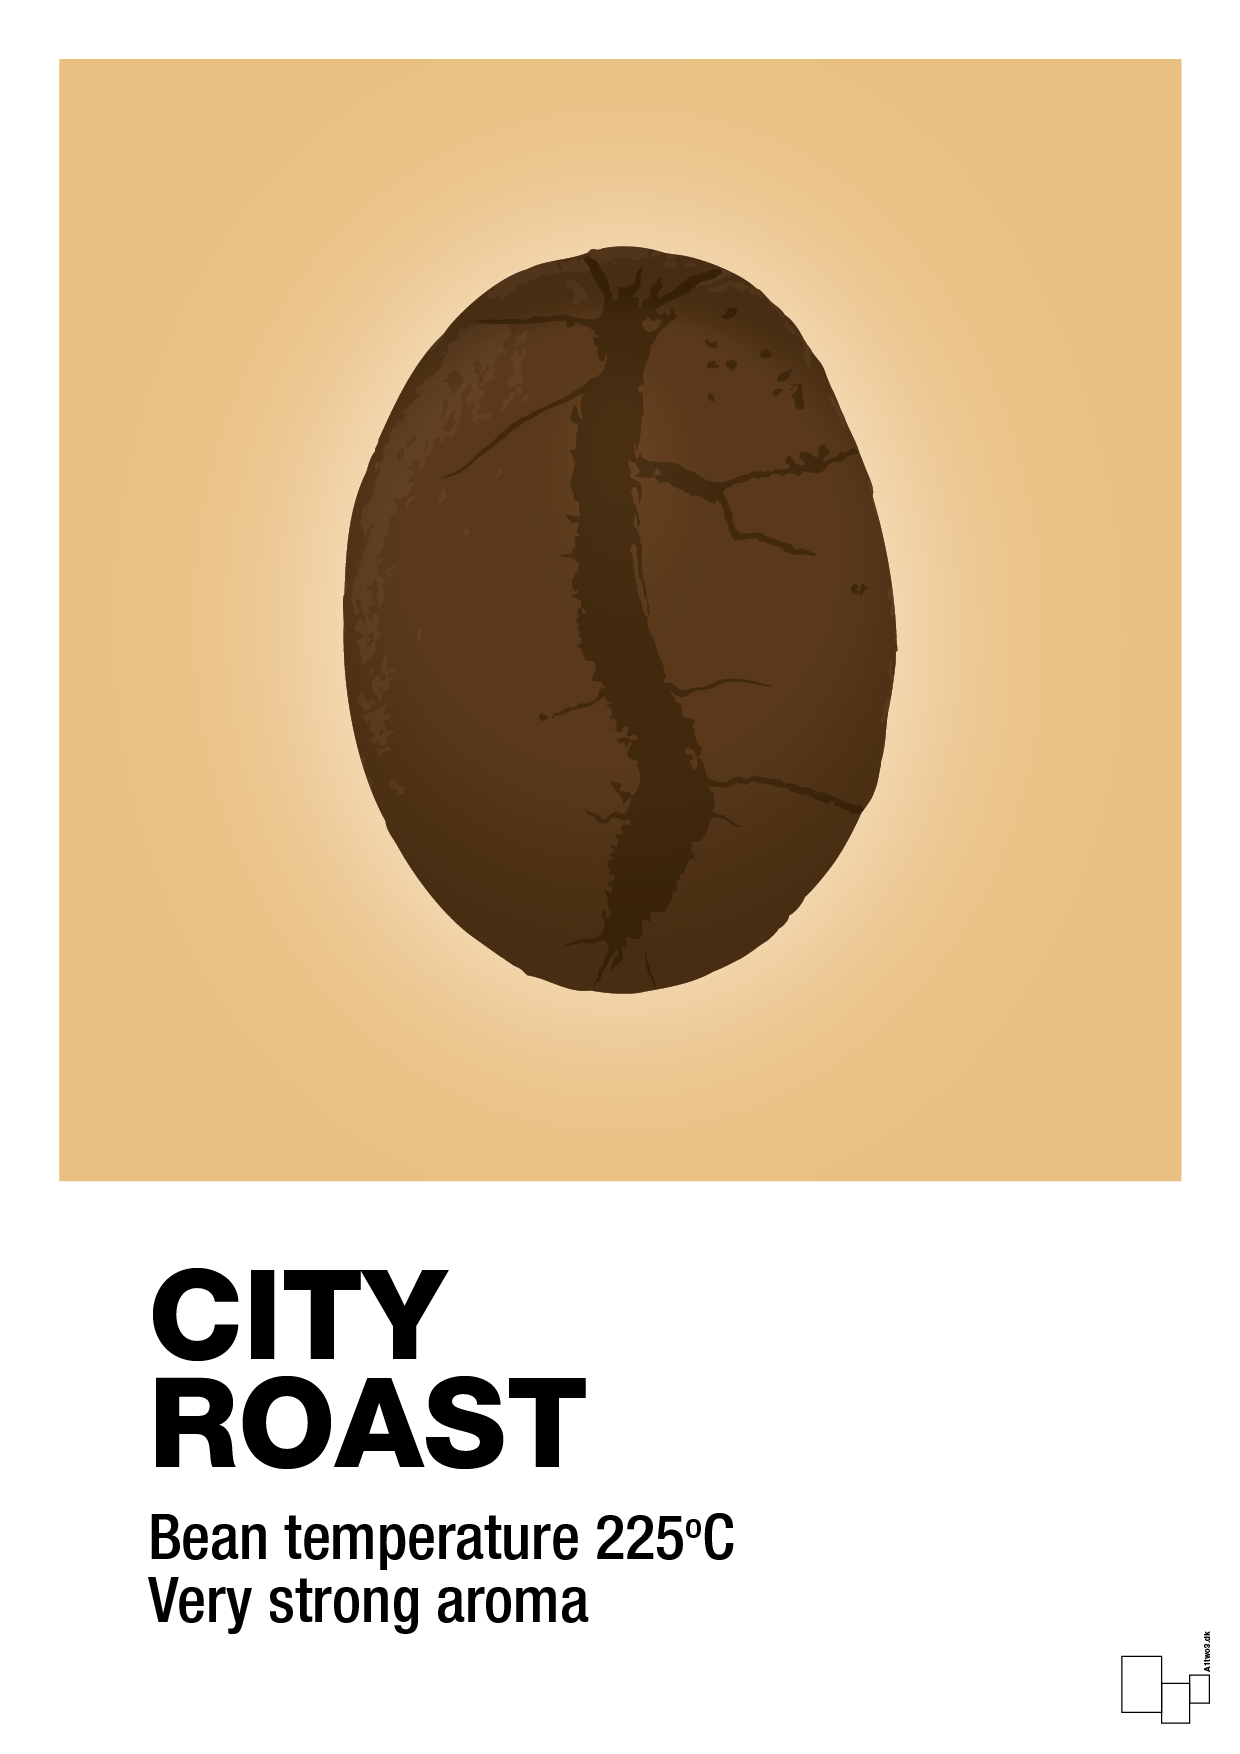 city roast - Plakat med Mad & Drikke i Charismatic